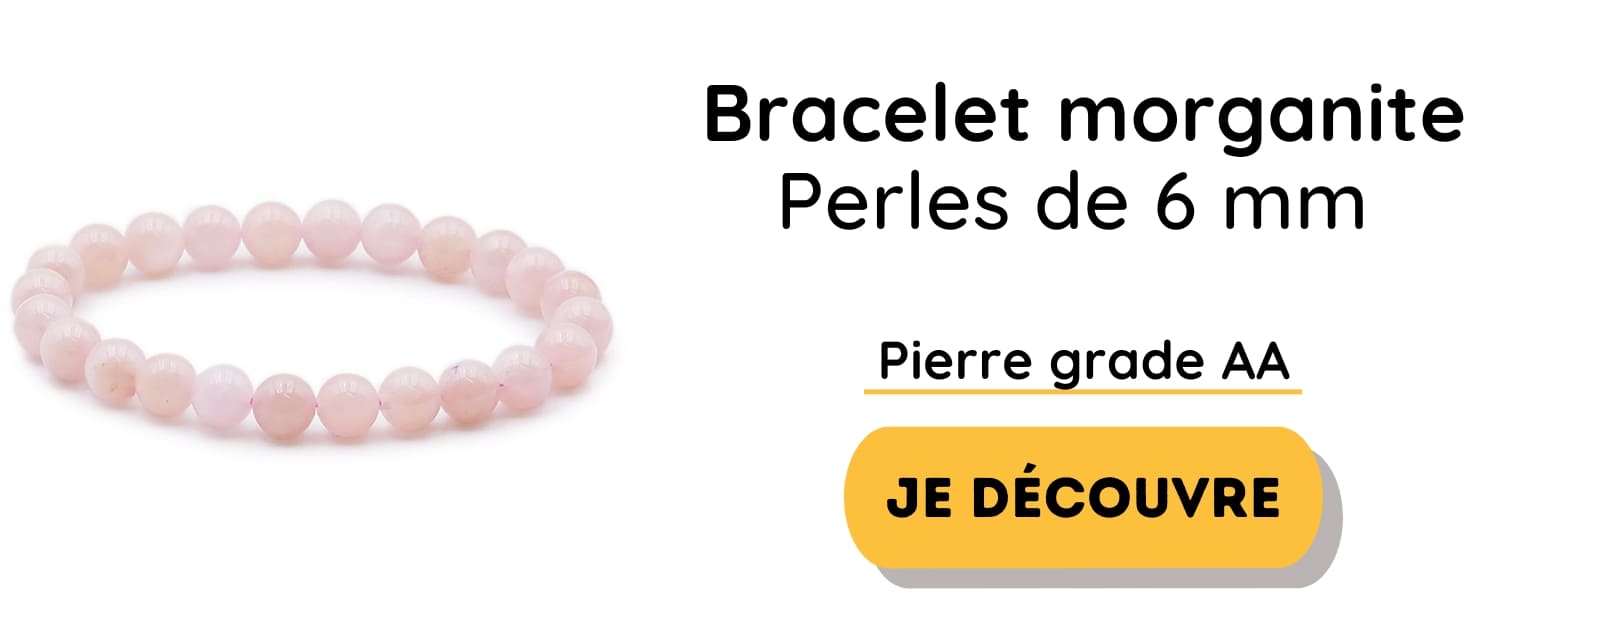 bracelet en morganite perles de 6mm